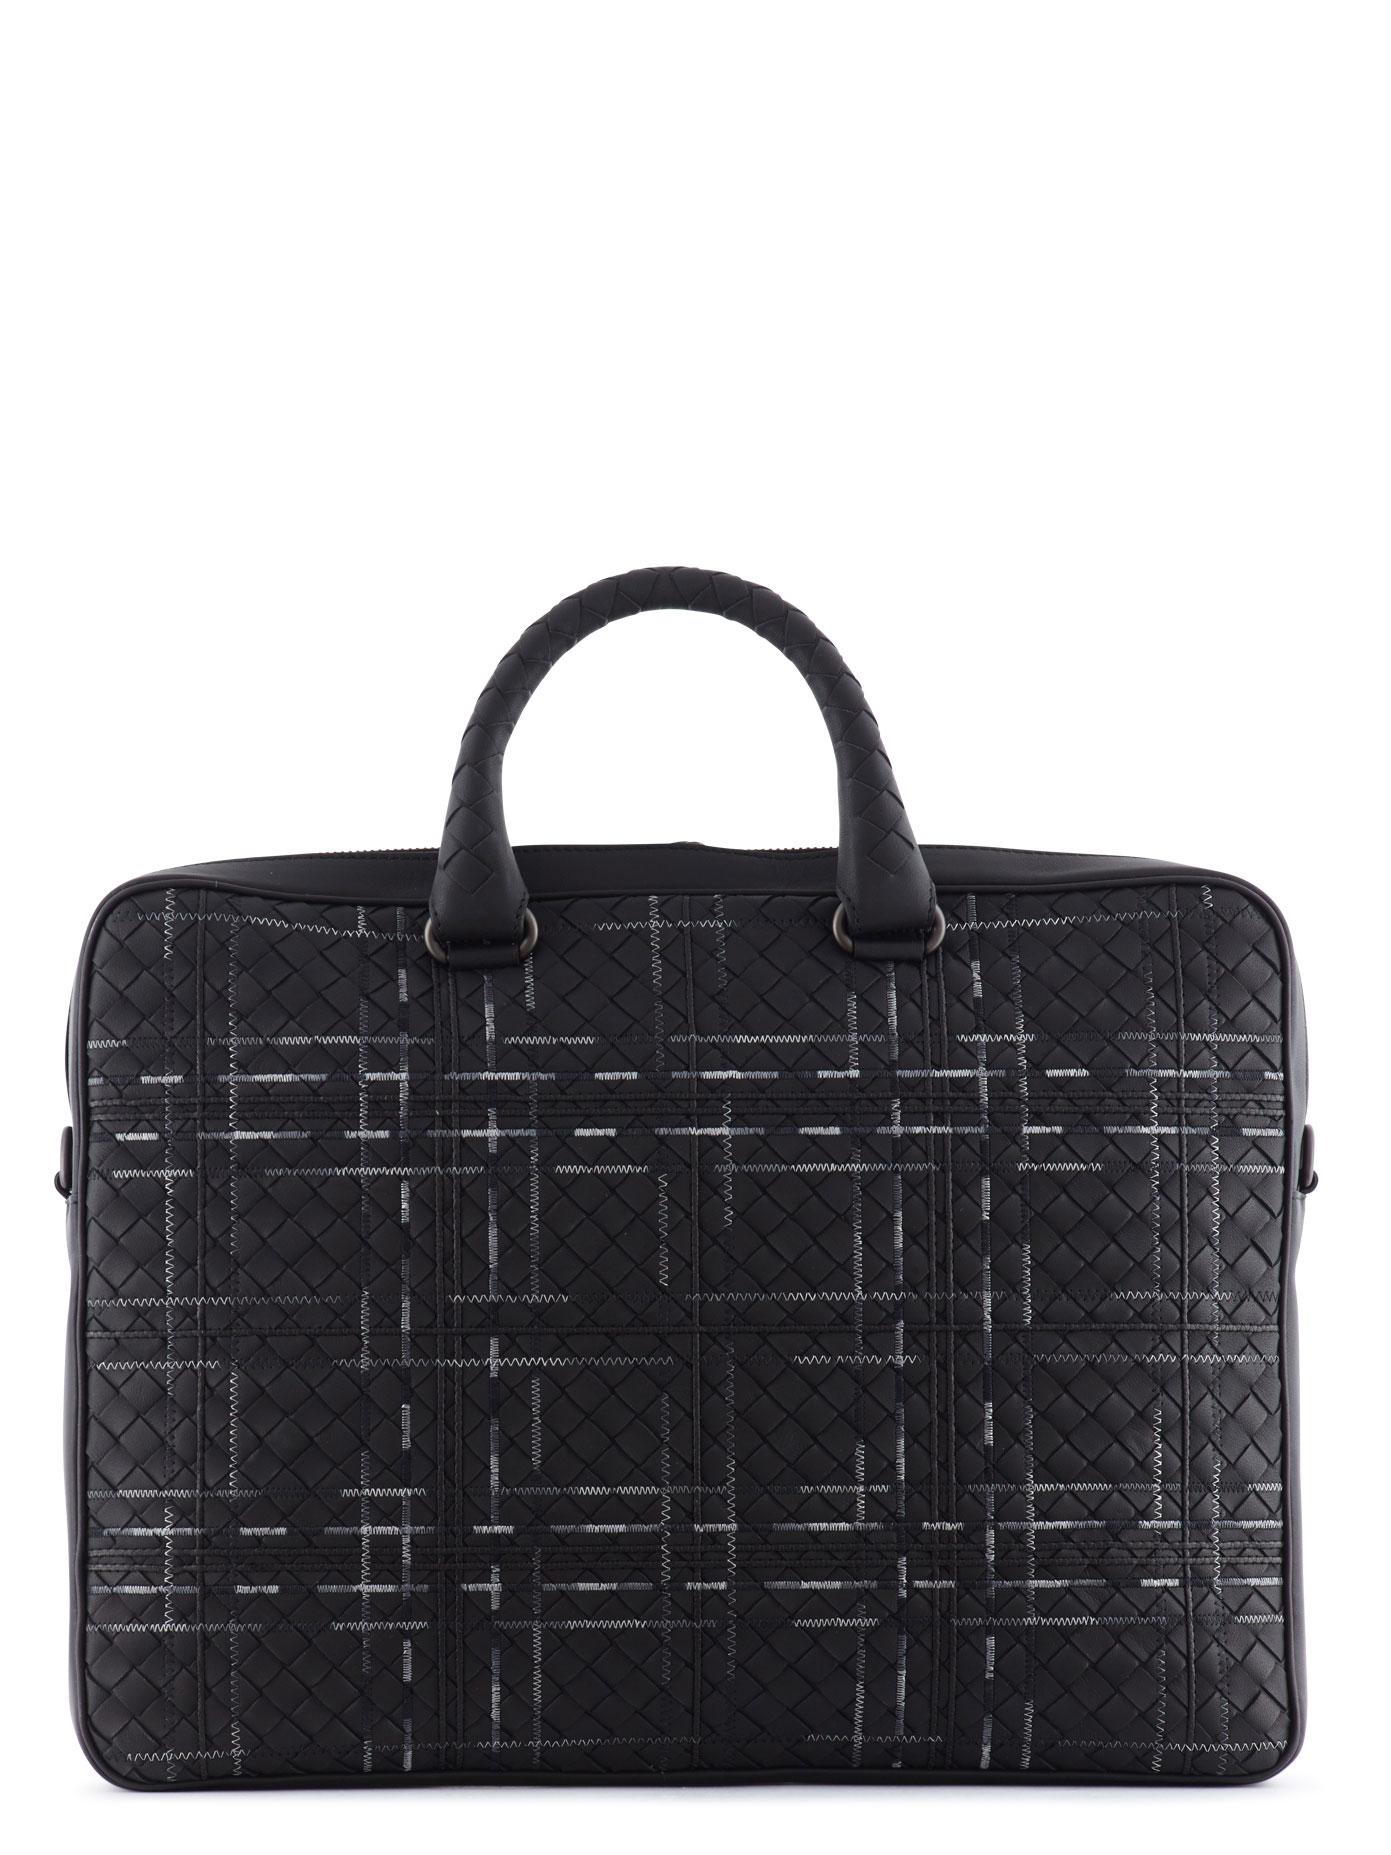 Lyst - Bottega Veneta Metropolis Briefcase in Black for Men